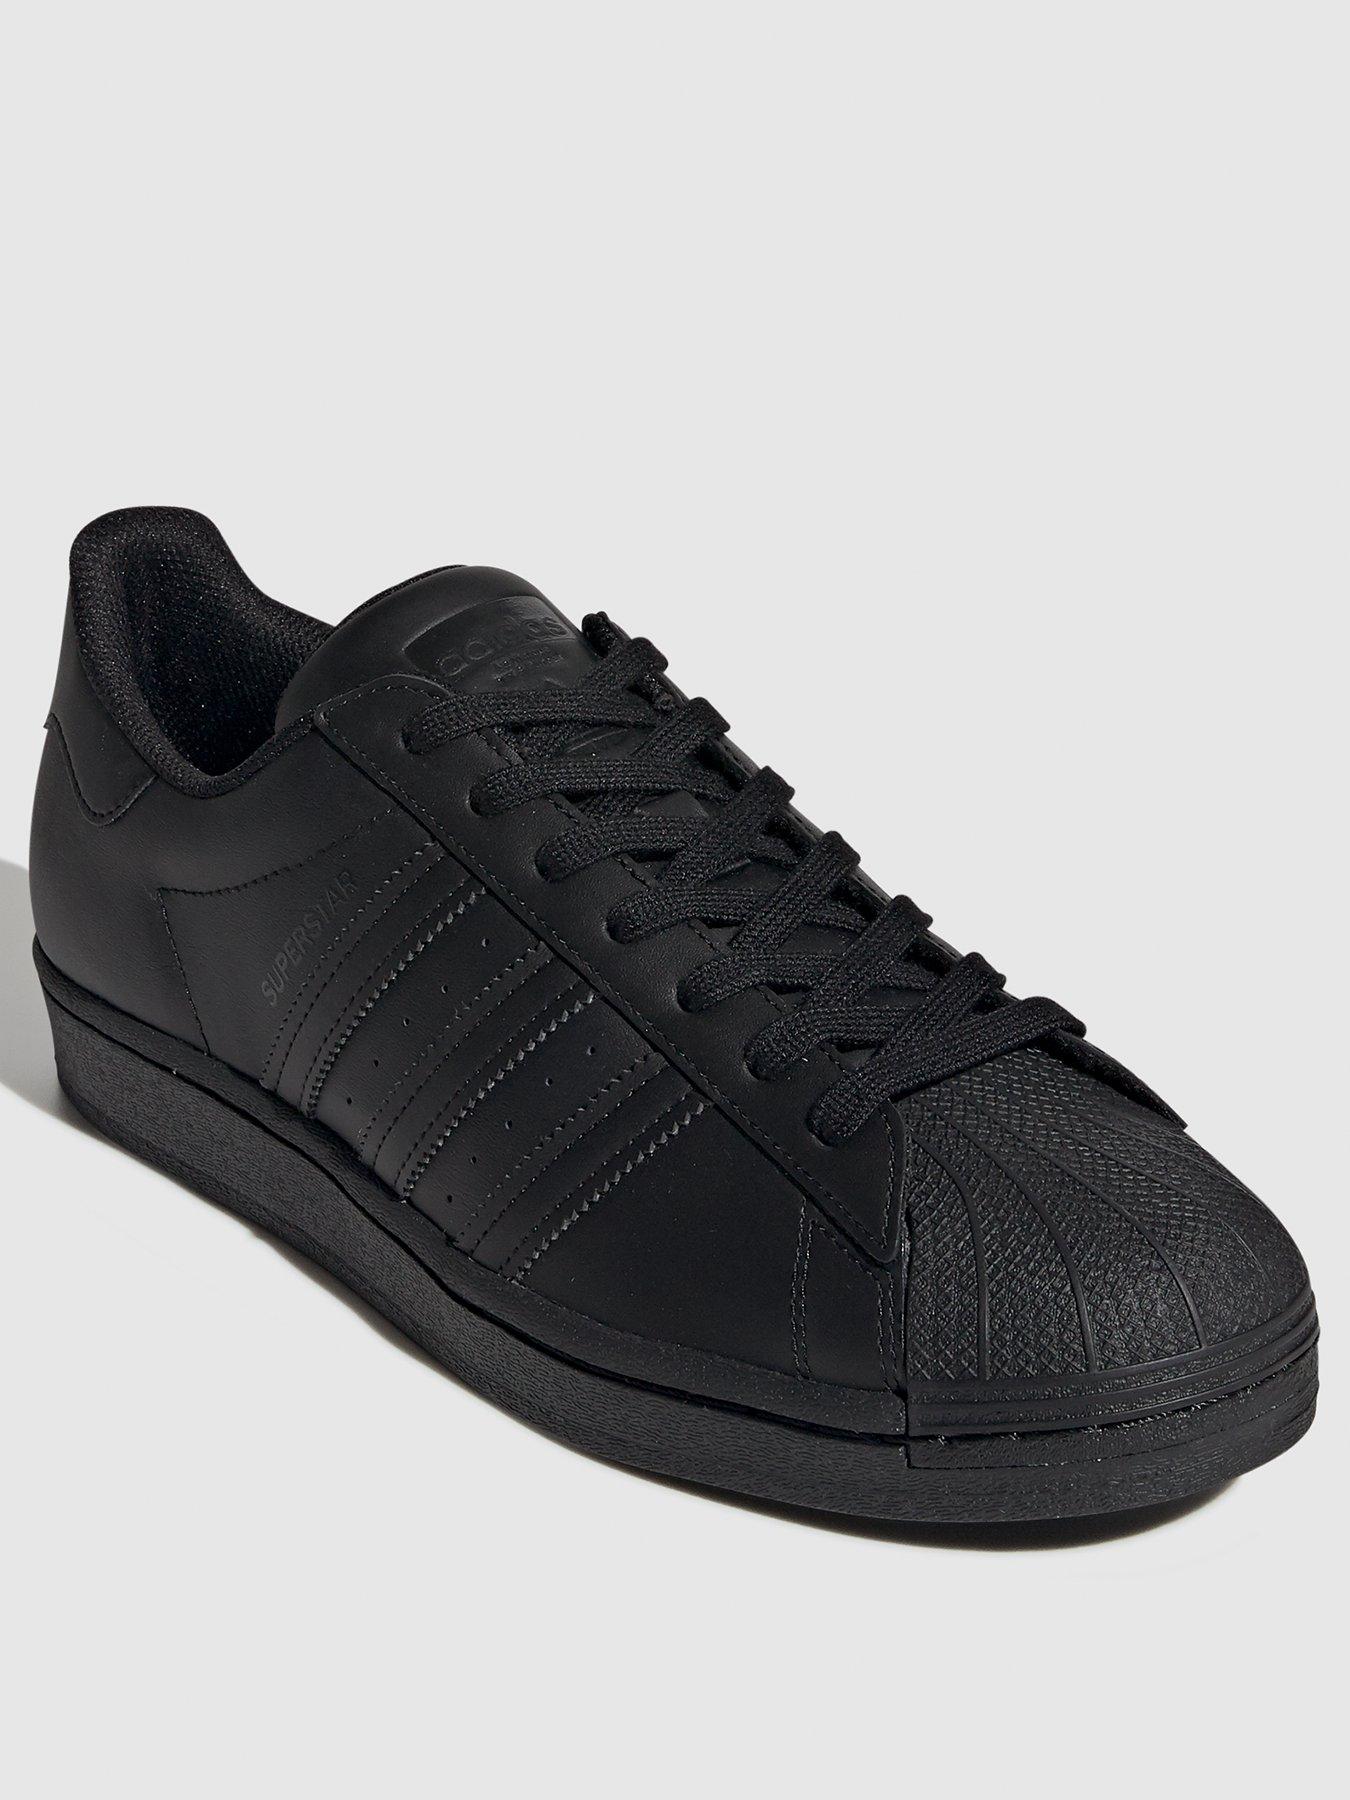 adidas originals superstar trainers in black